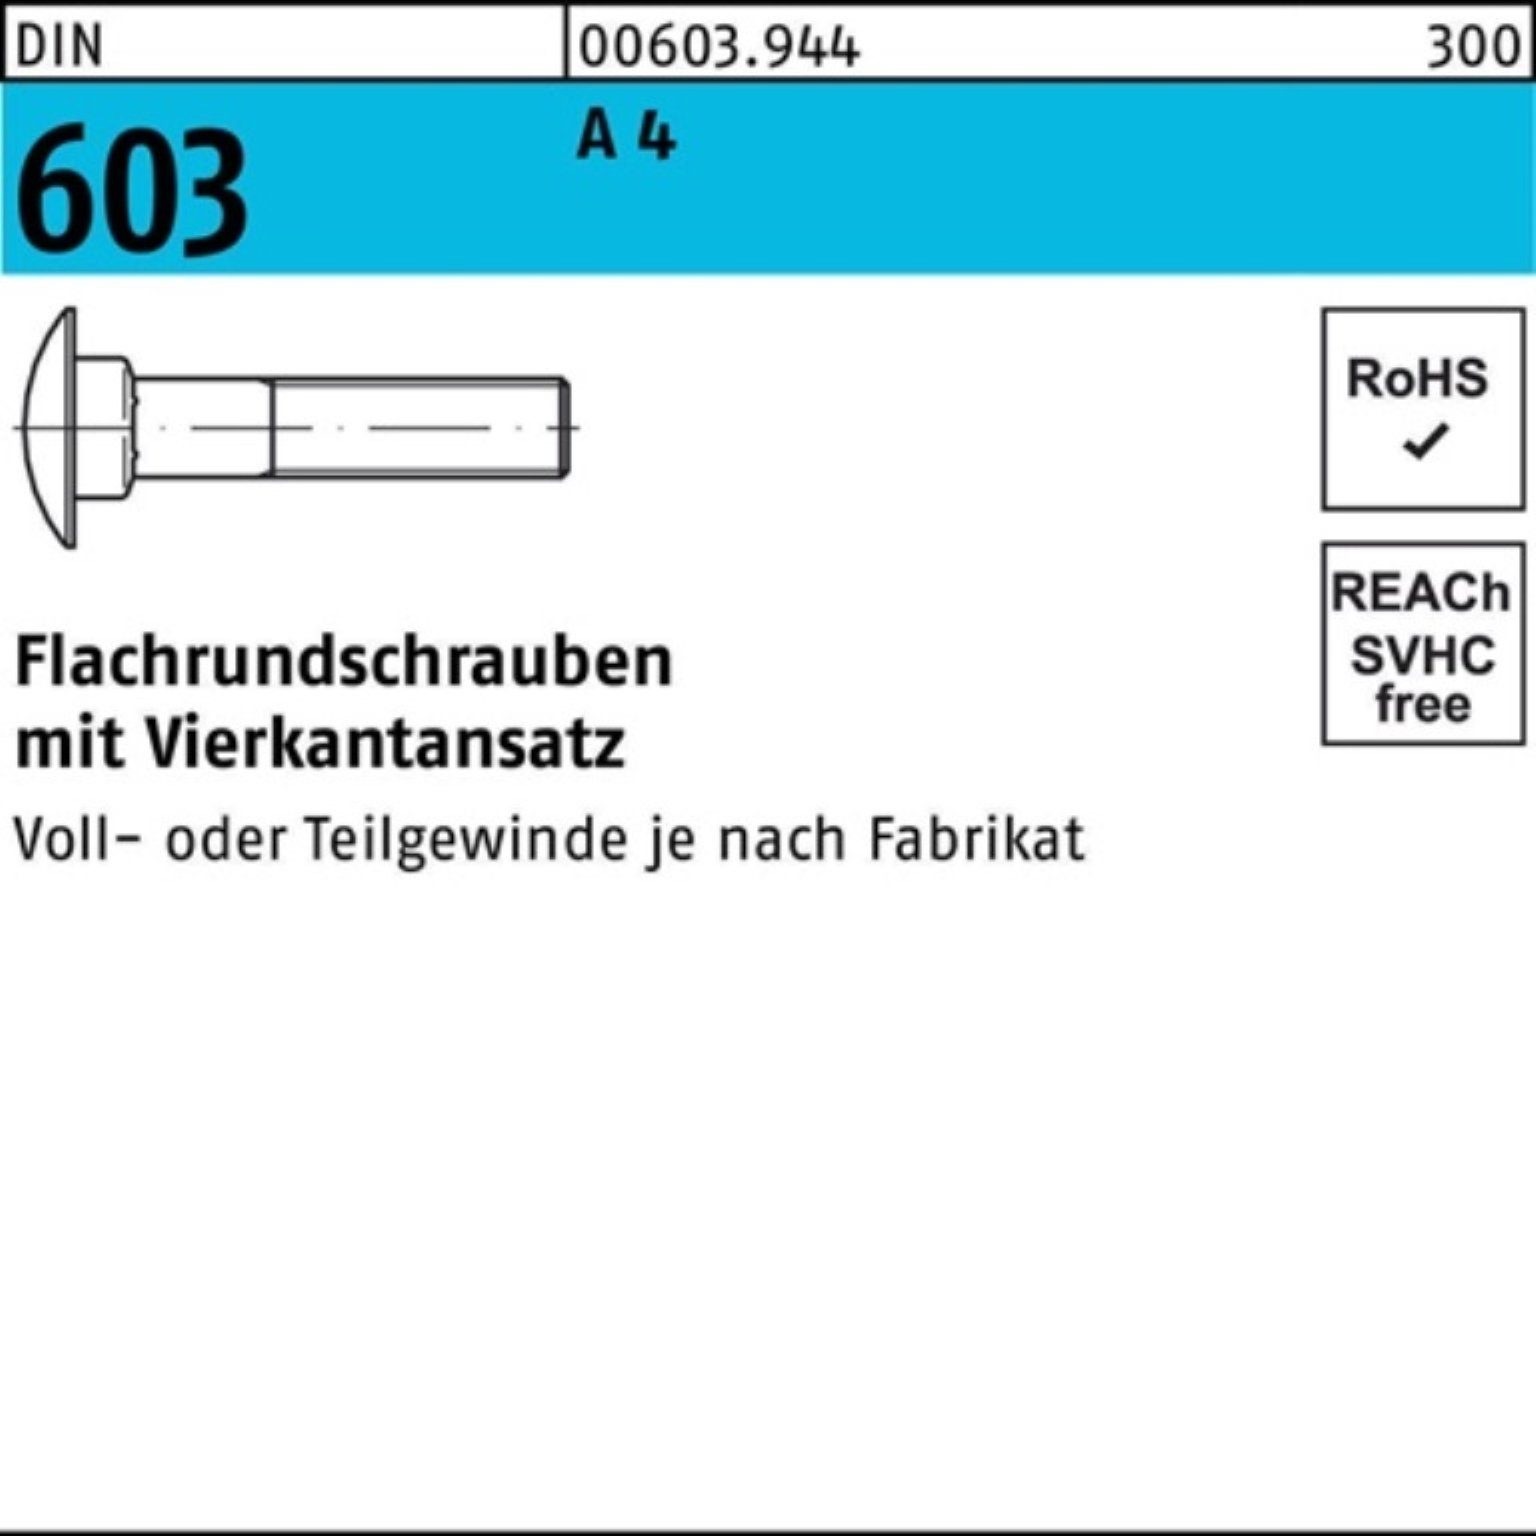 Reyher Schraube 100er Pack Flachrundschraube DIN 603 Vierkantansatz M12x 100 A 4 1 St